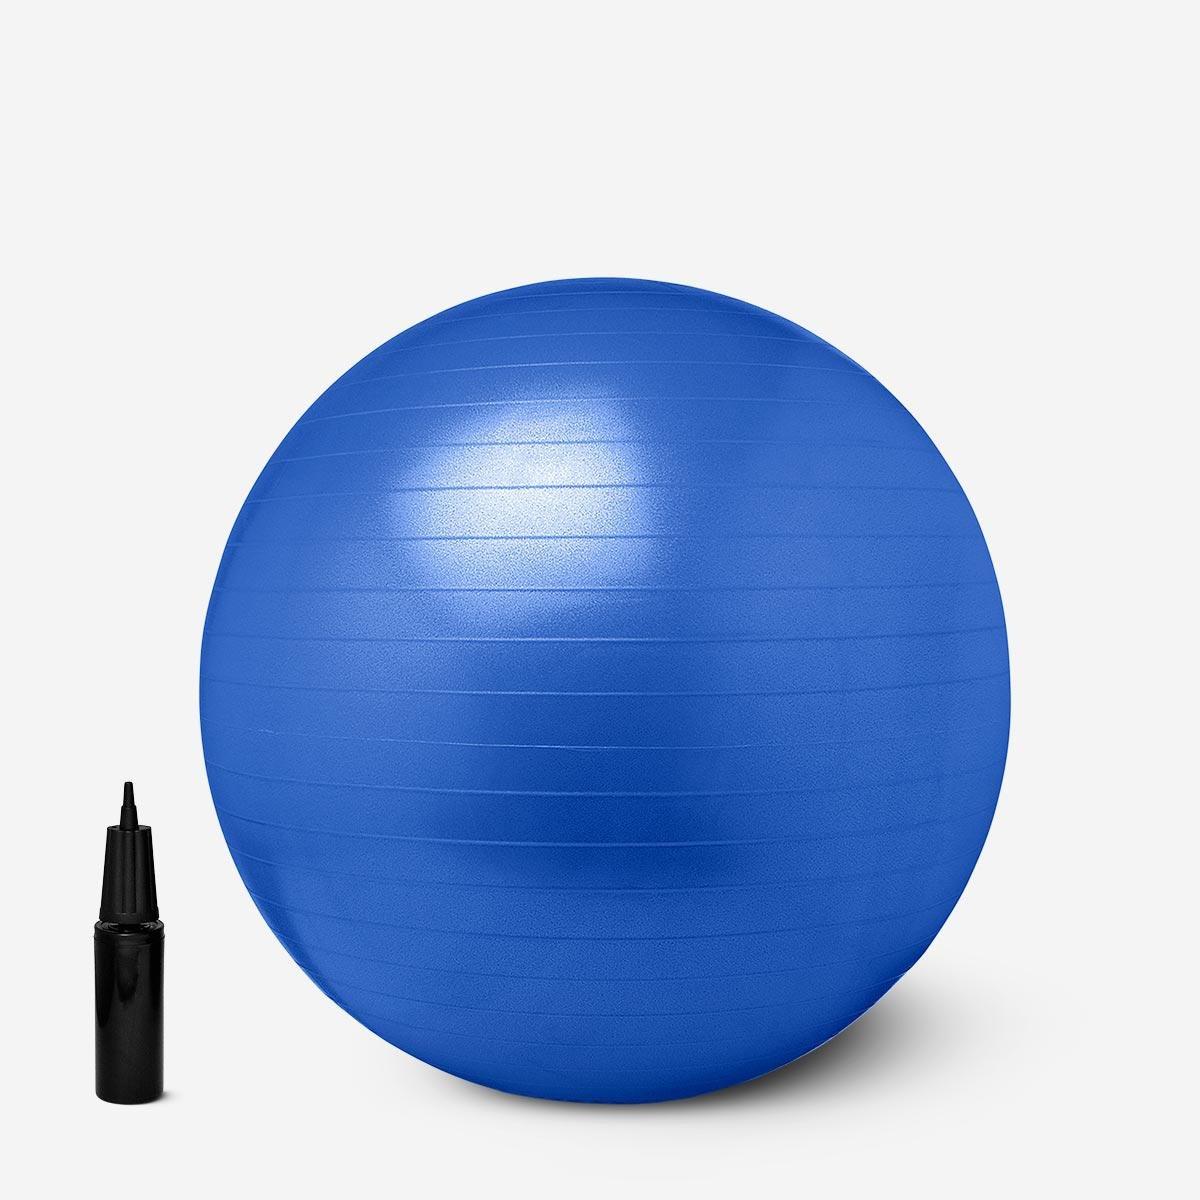 Blue gym ball